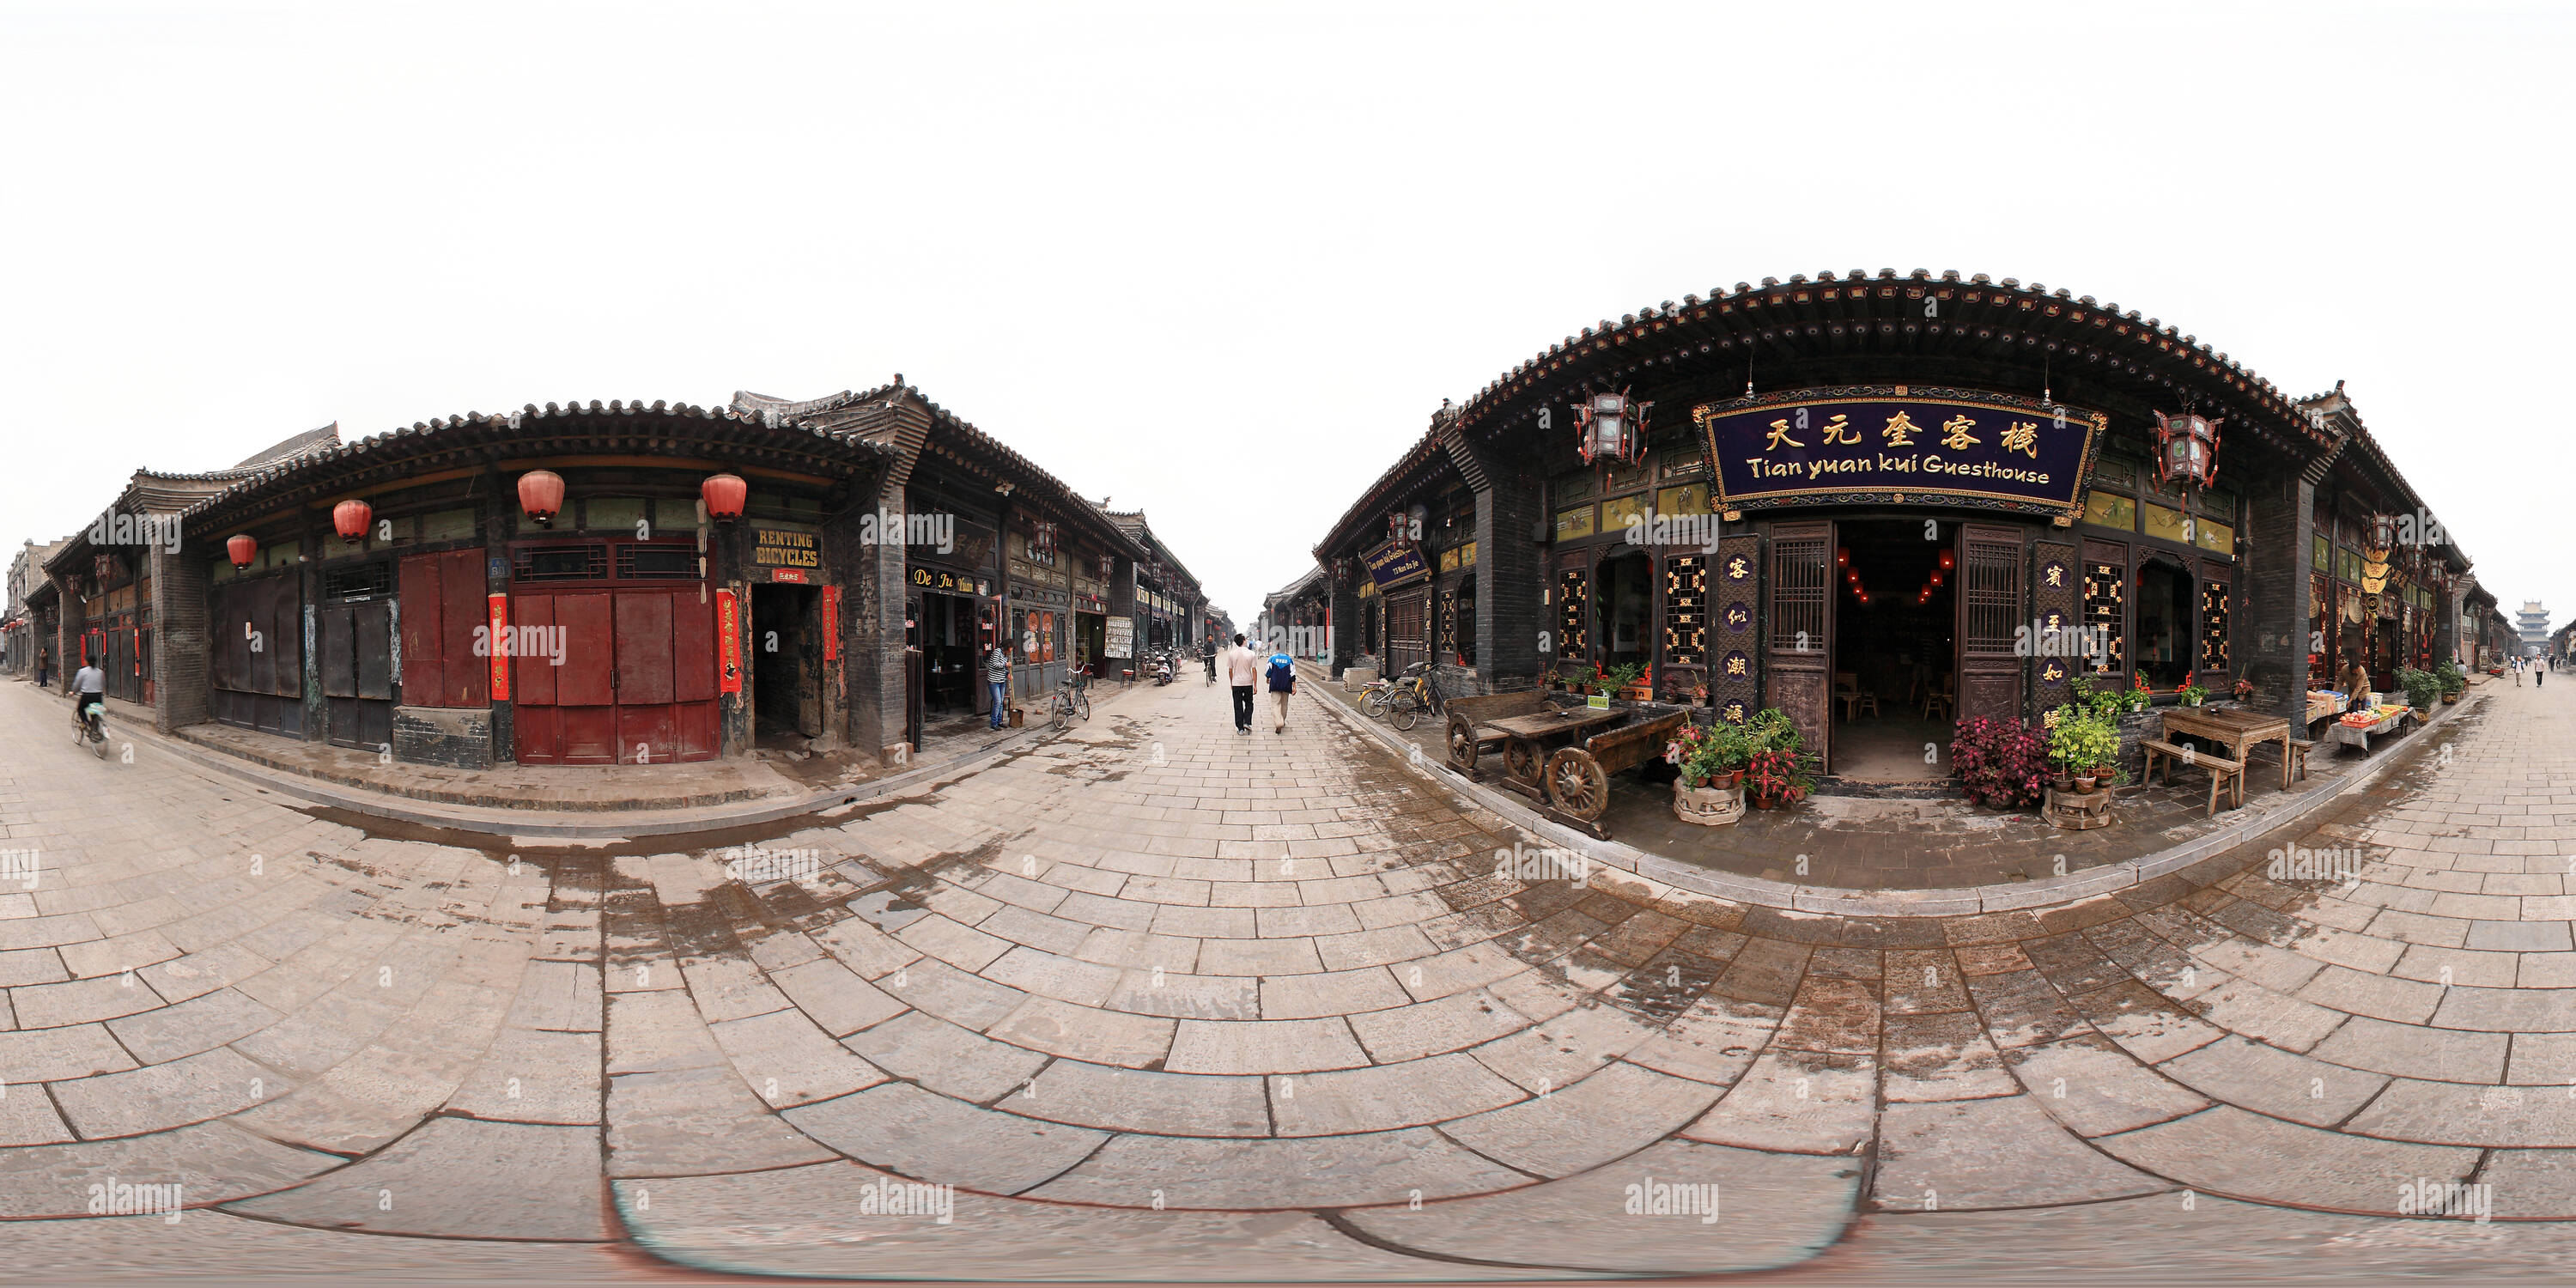 360 degree panoramic view of Pingyao Ancient City - Days Inn Corey Yuen